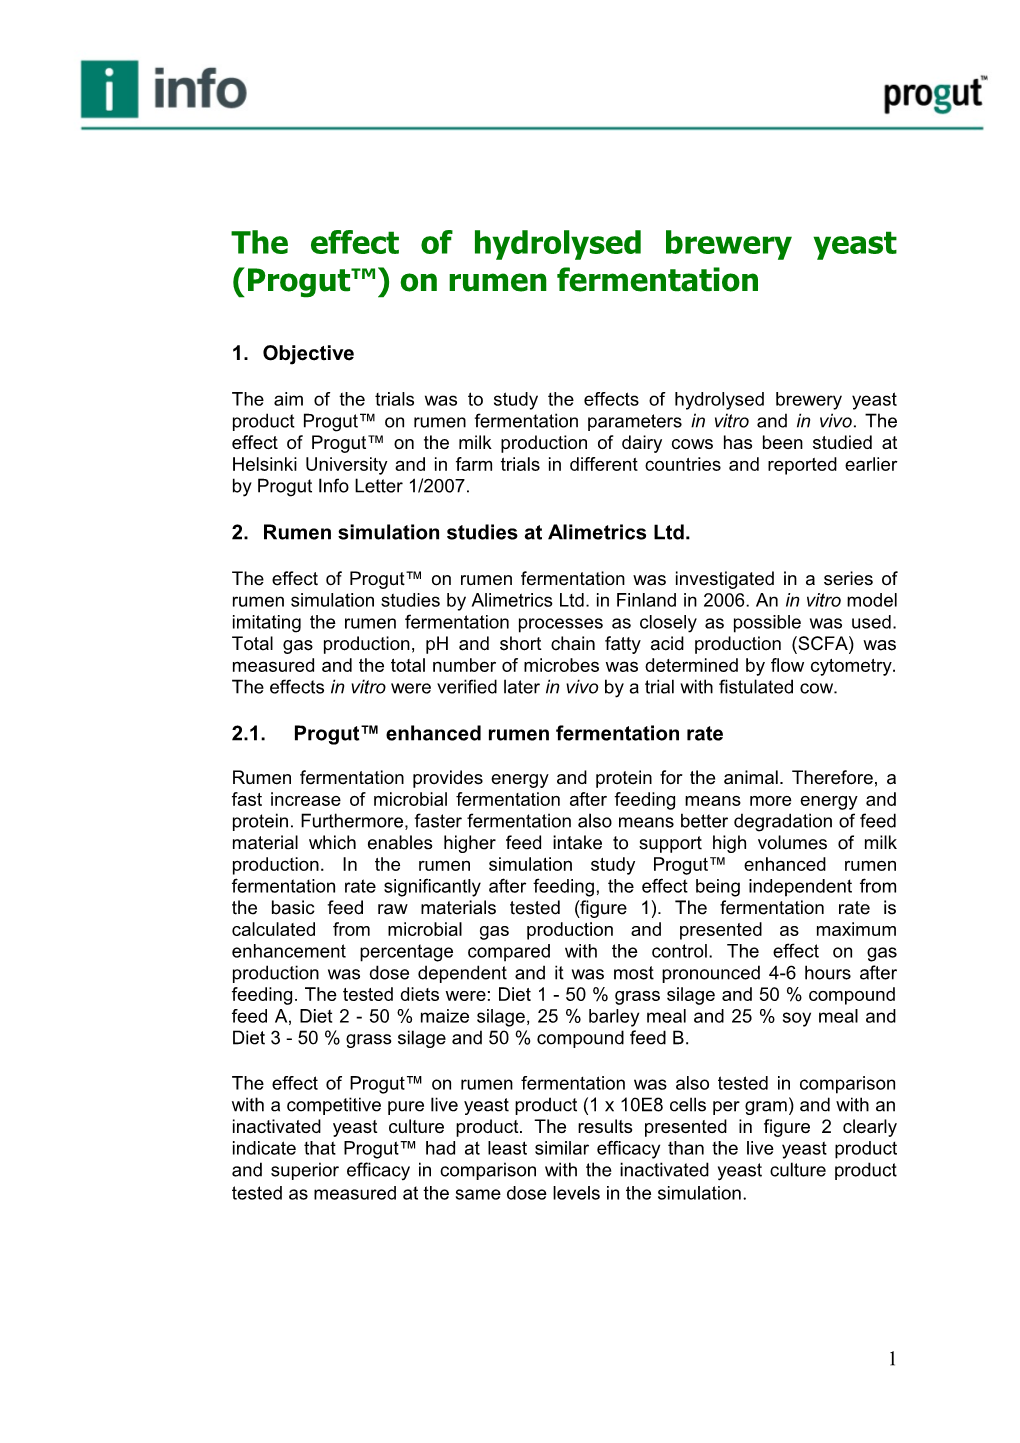 The Effect of Hydrolysed Brewery Yeast (Progut )On Rumen Fermentation